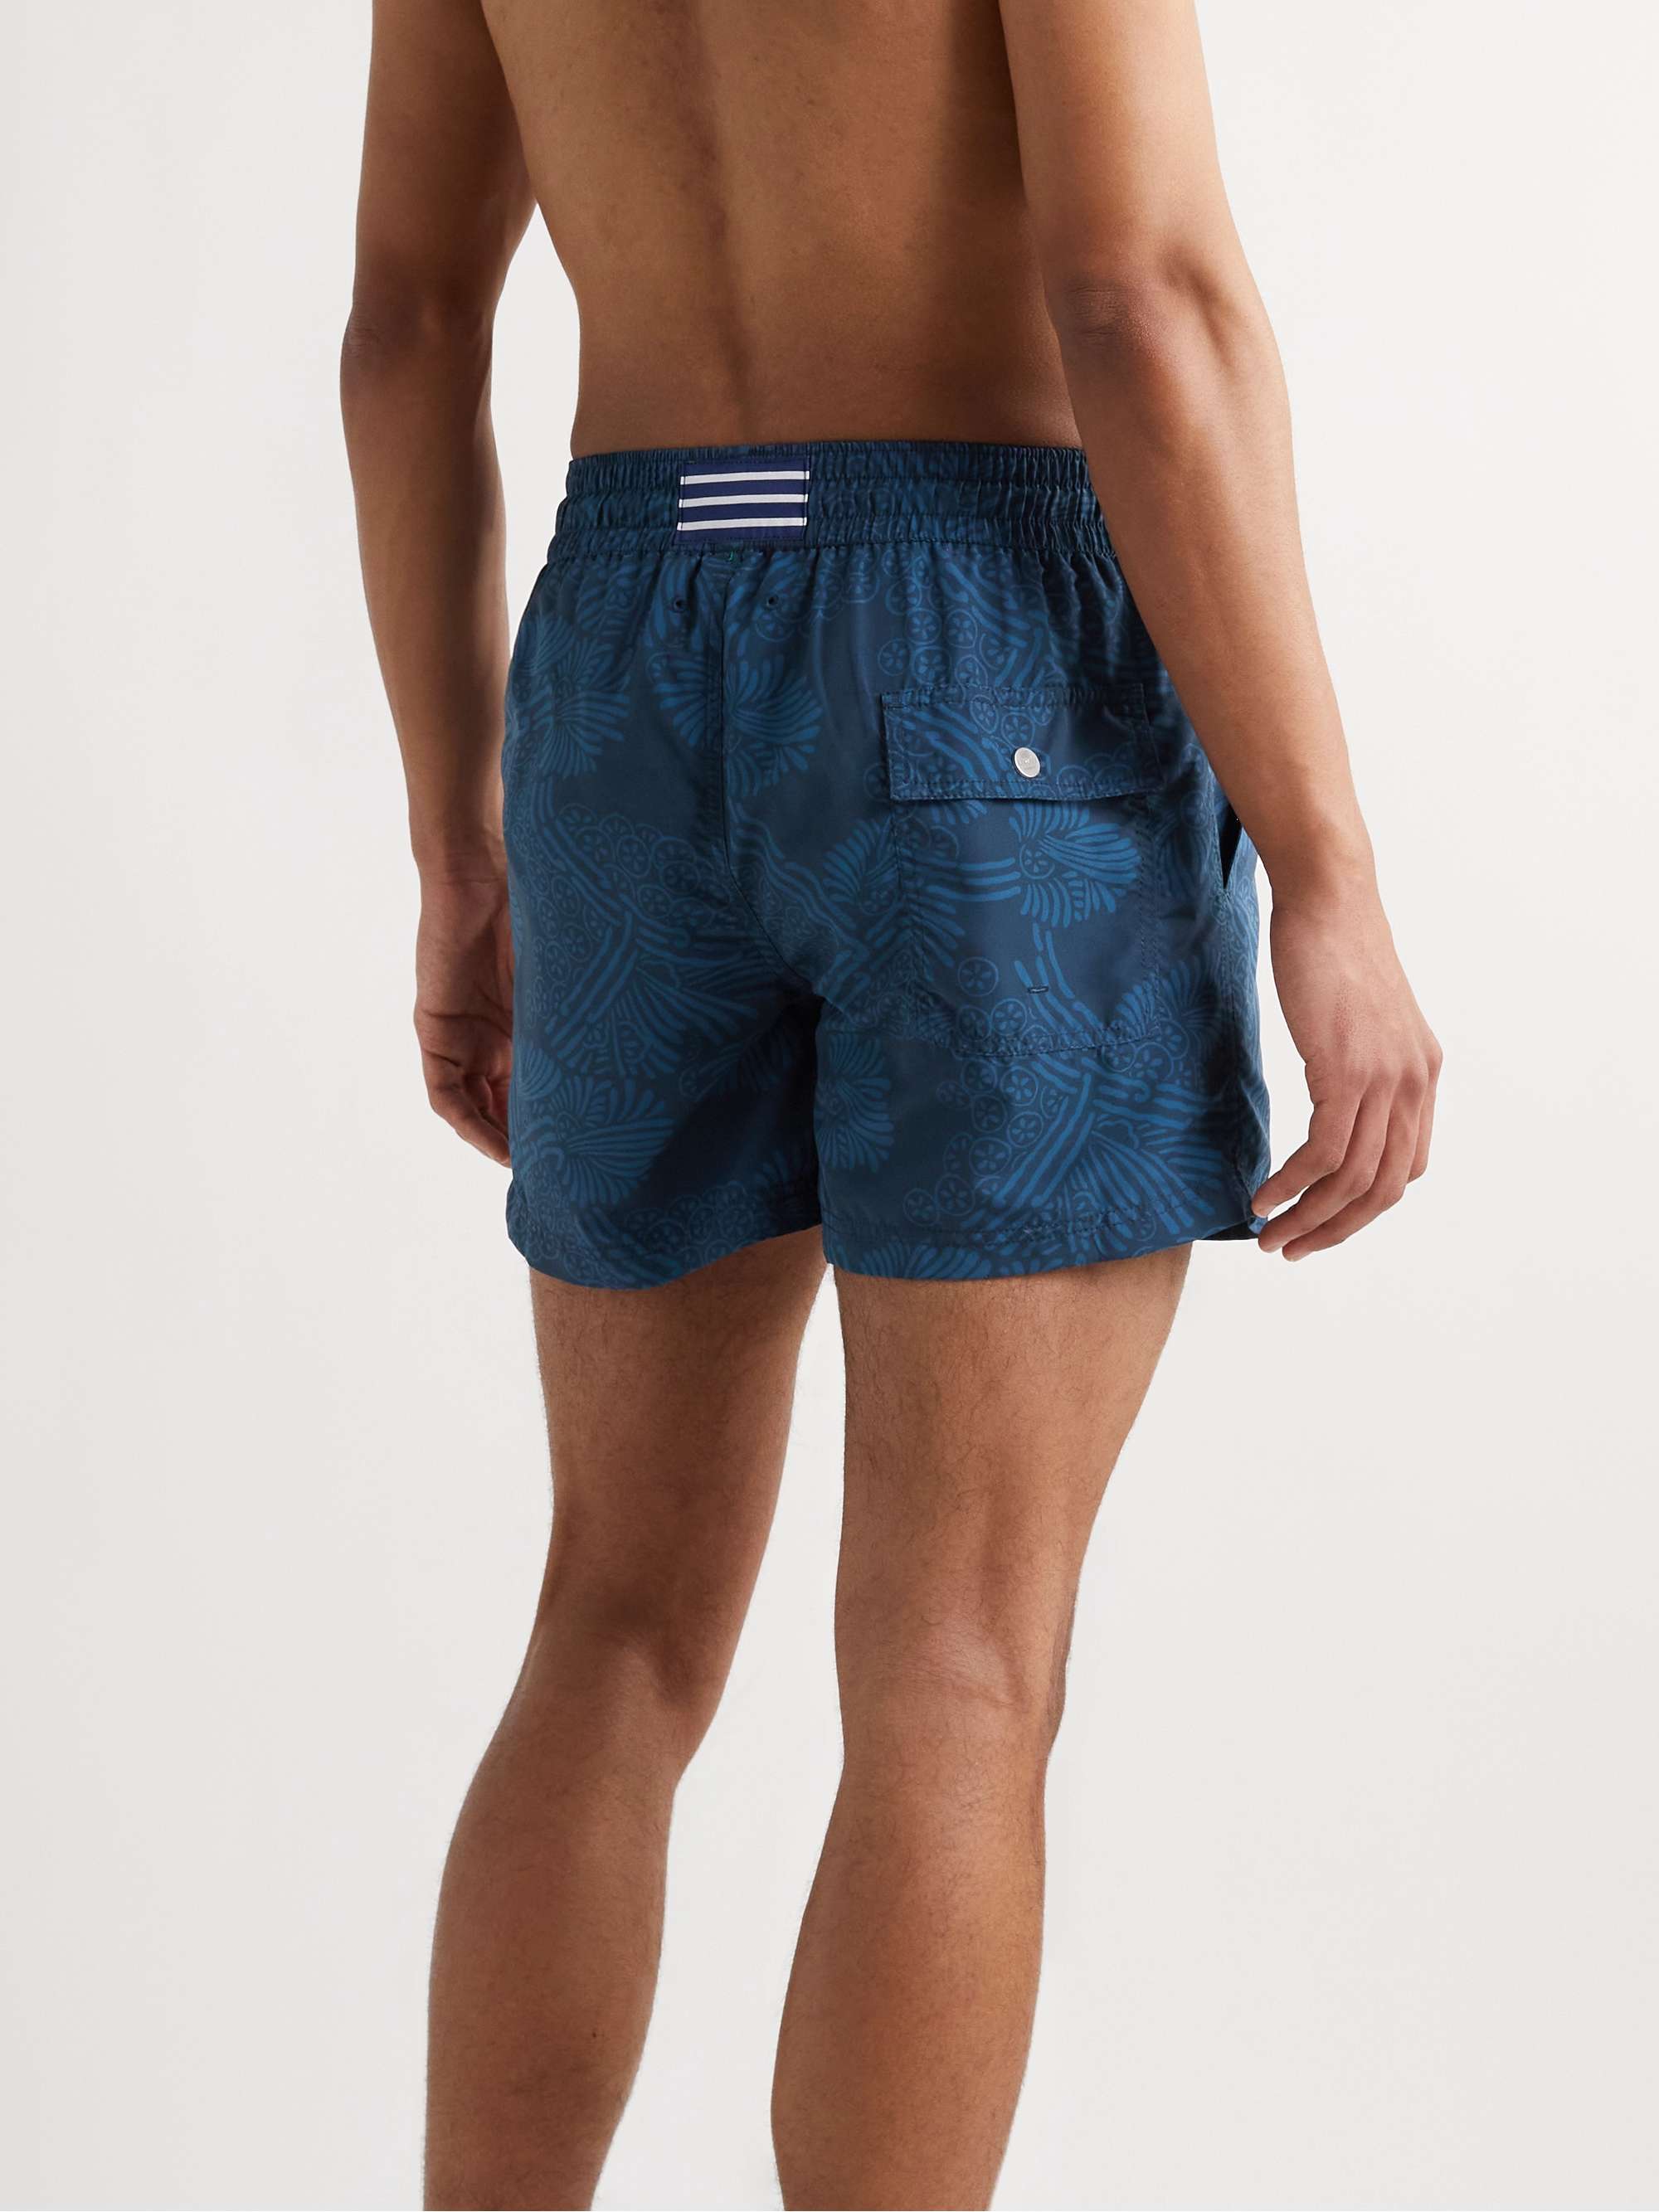 ATALAYE Gorena Mid-Length Printed Recycled Swim Shorts